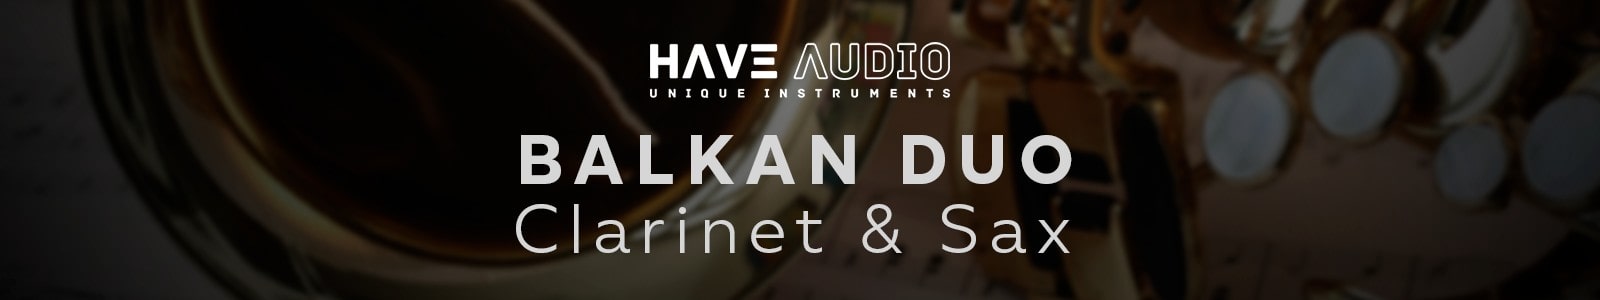 Have Audio Balkan Duo Bundle